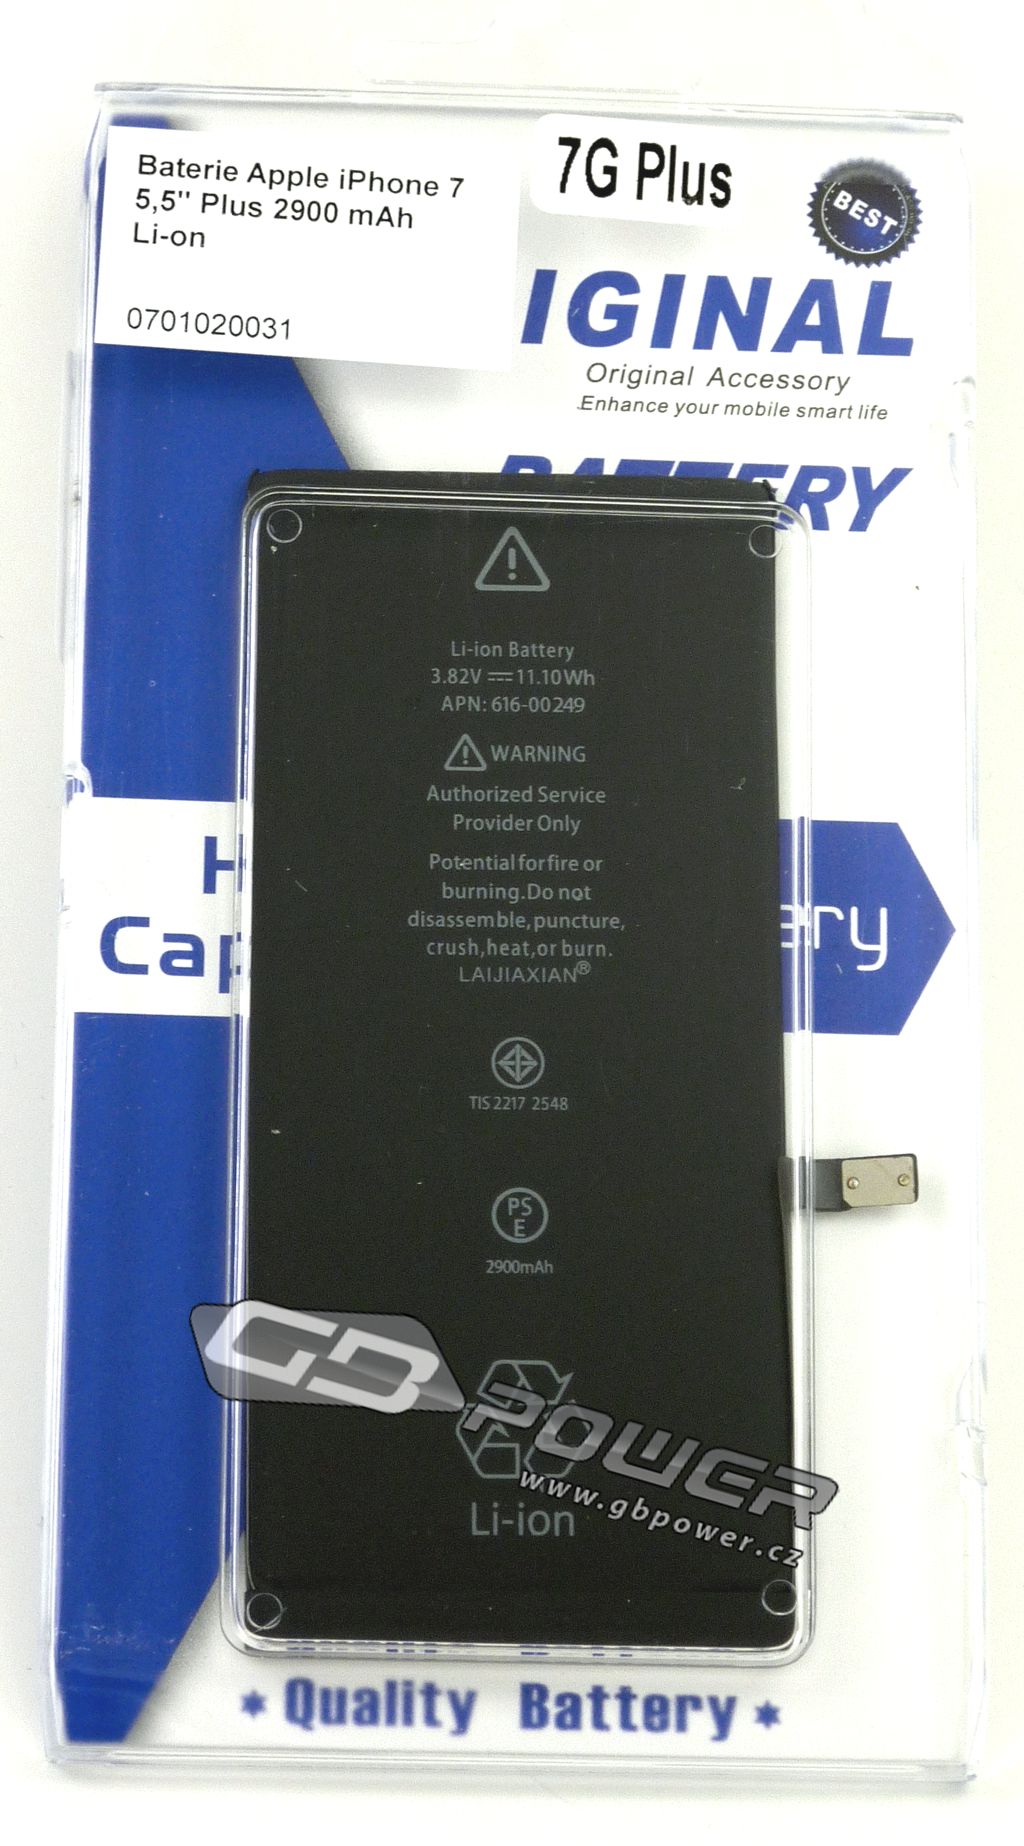 Baterie iPhone 7 5,5 Plus 2900 mAh Li-on